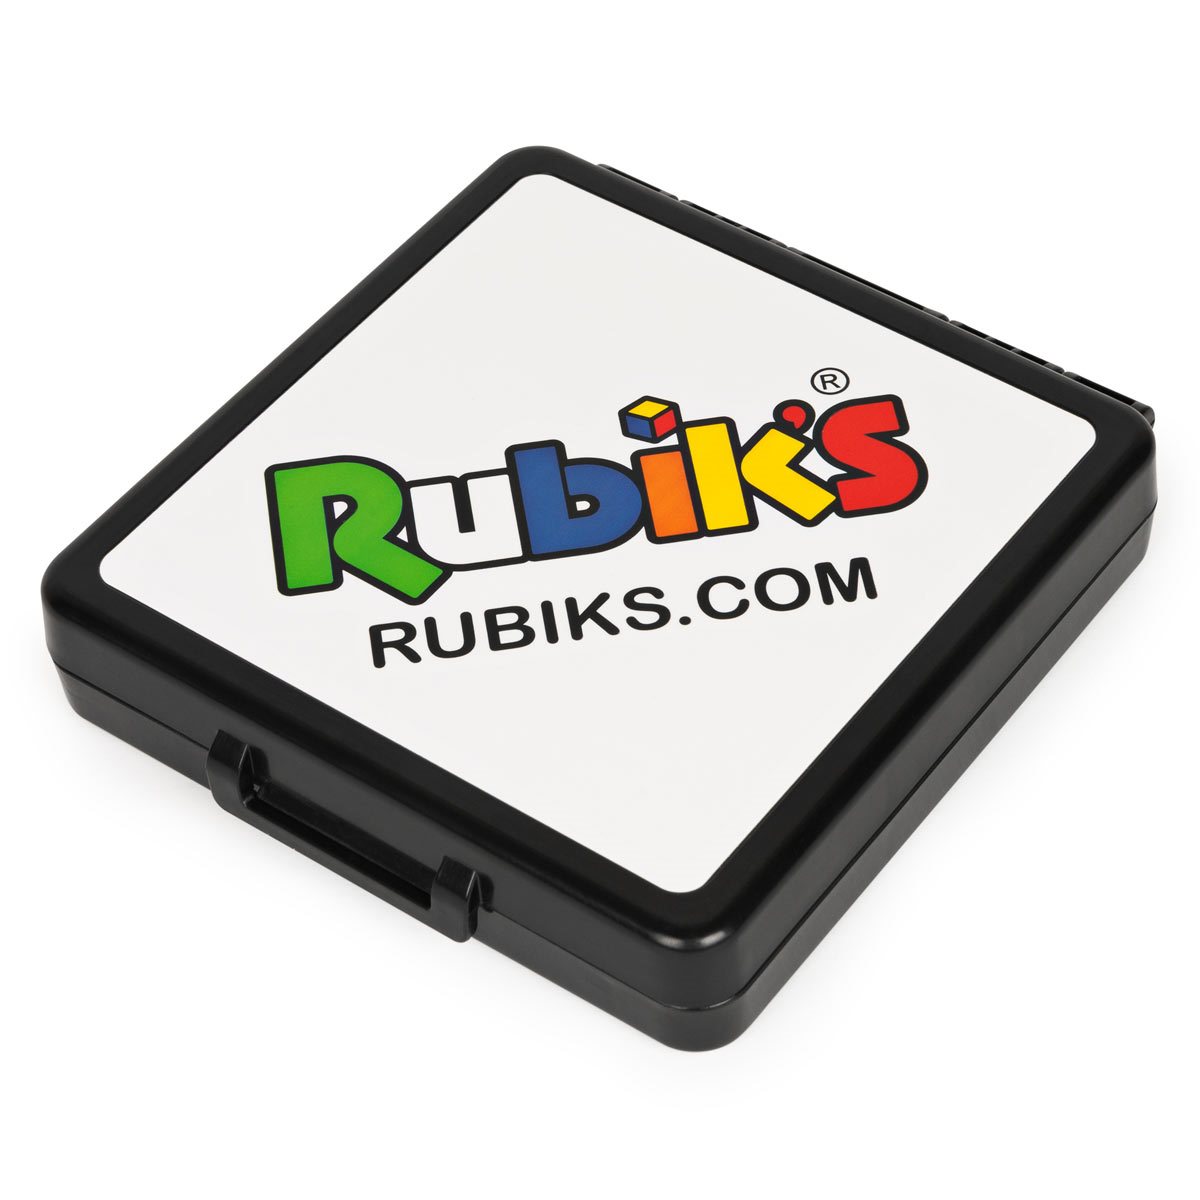 Mini Rubik's Cube-3x3x3-1.25 inches